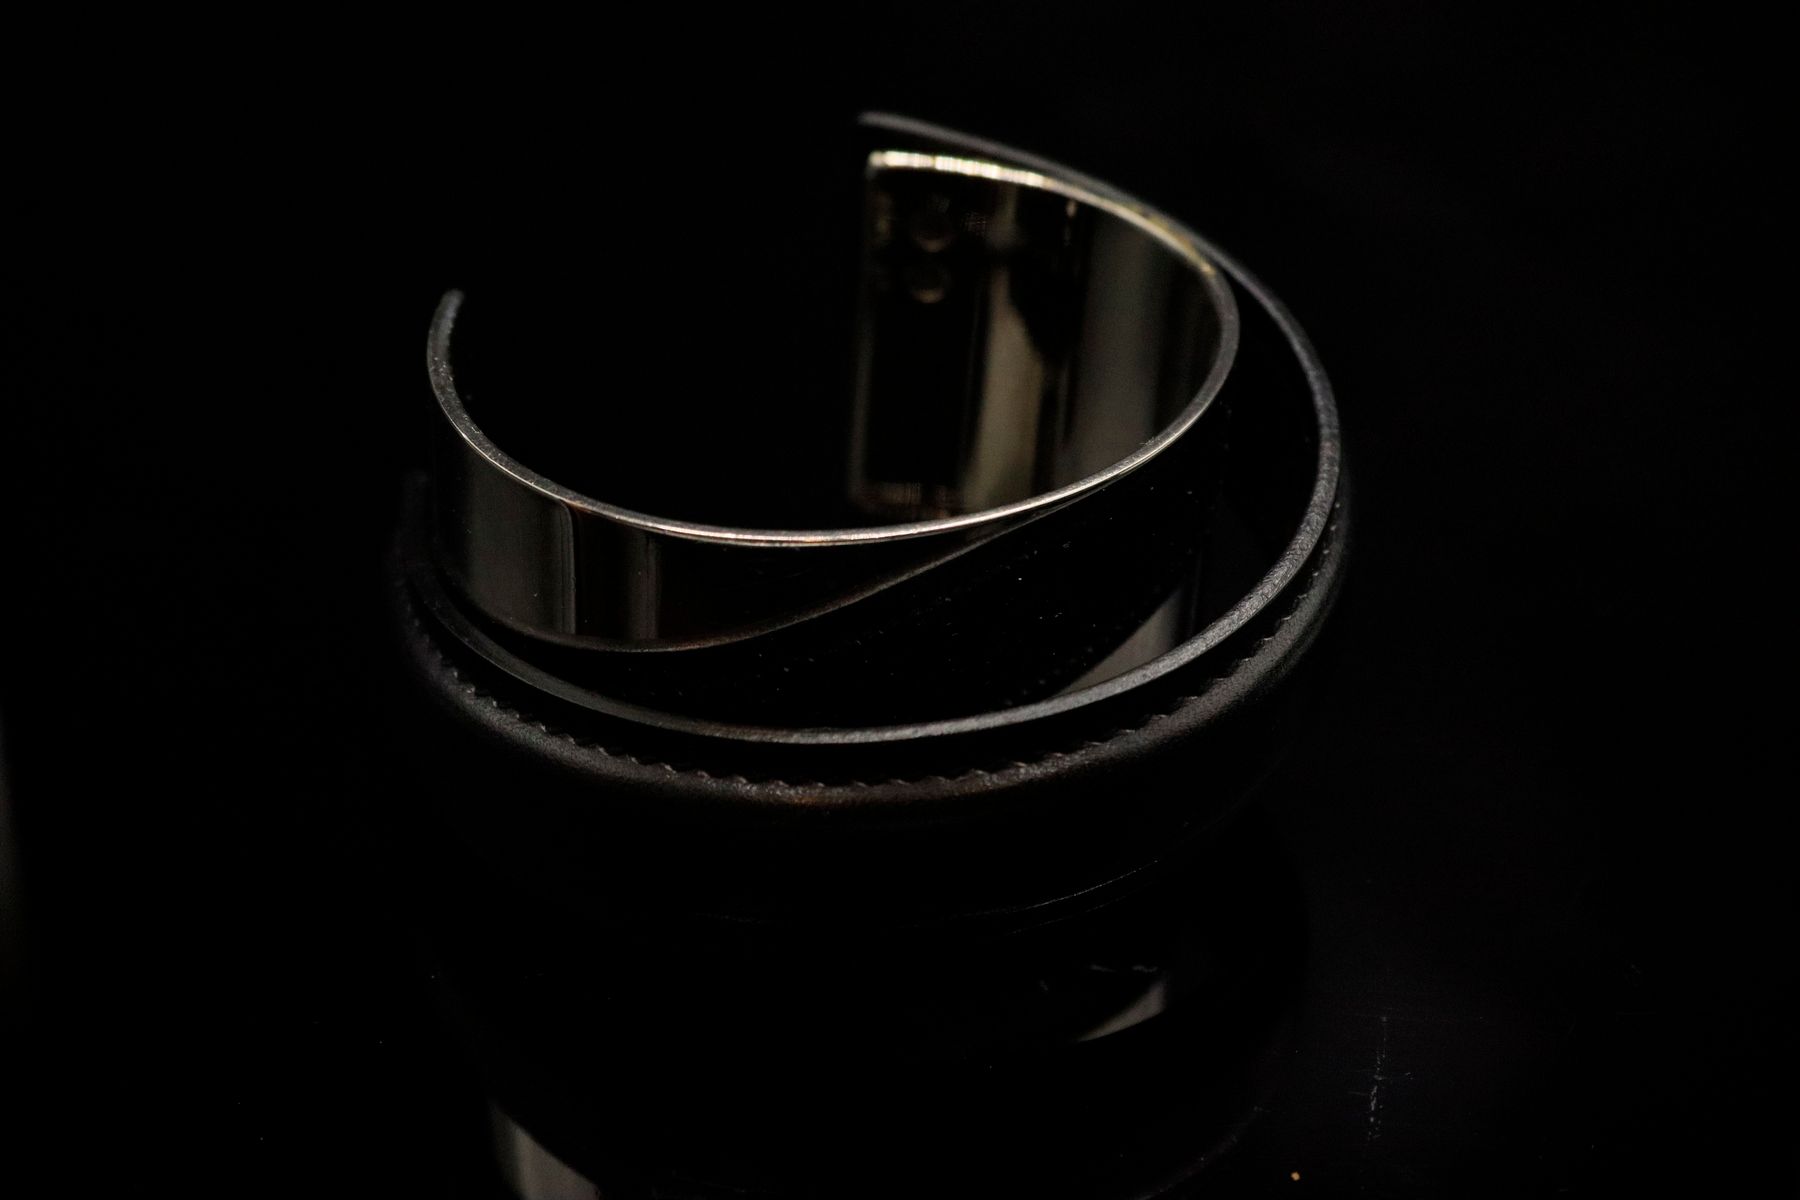 Null 巴黎 HERMES 
约 2000 年底

罕见的不对称手镯，饰以硬质黑色皮质表带。 

最宽处直径：6.5 毫米 

附带包装盒。